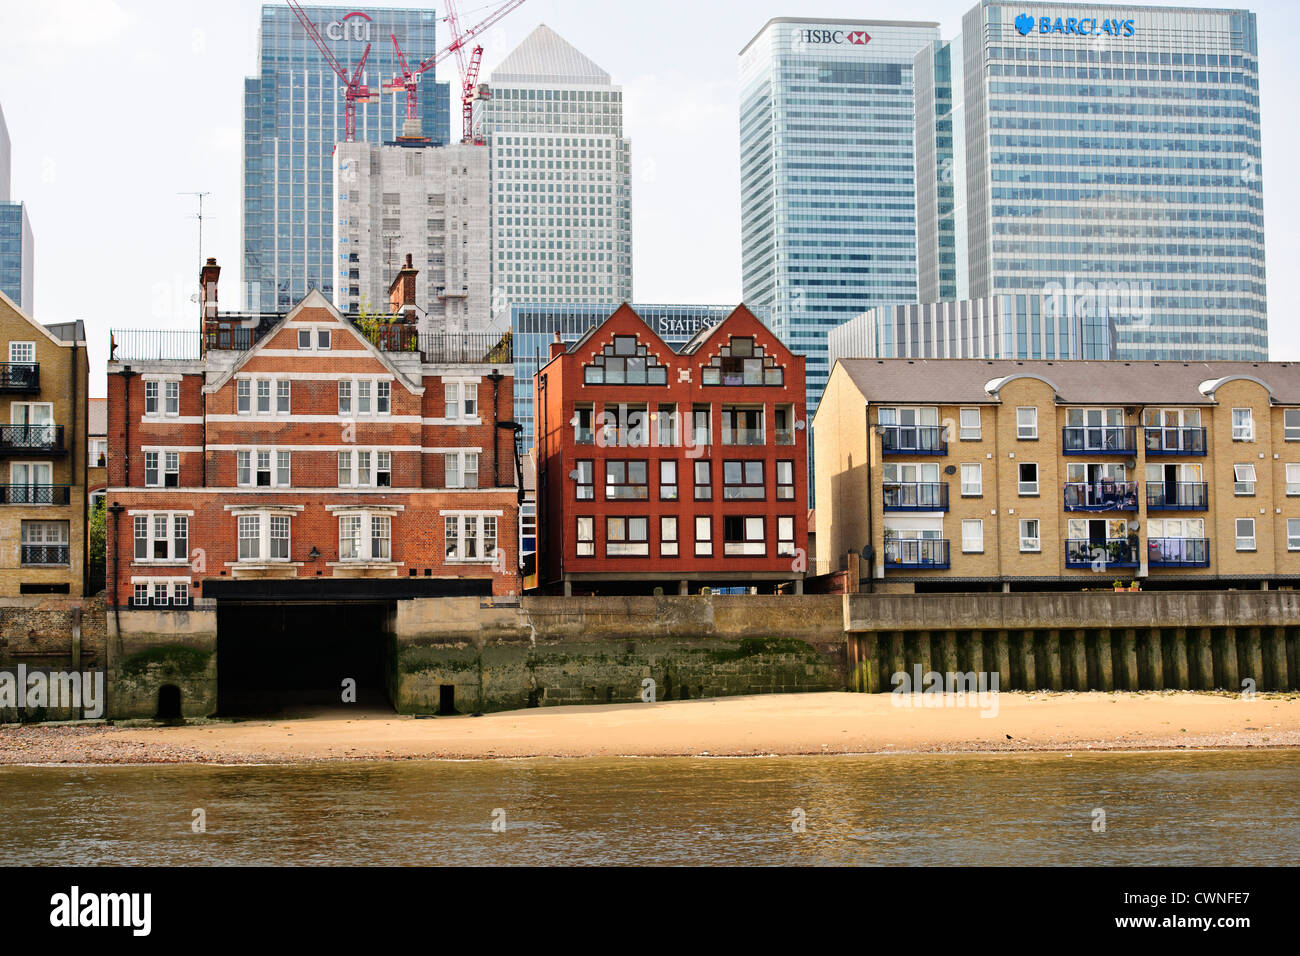 Canary Wharf, HSBC, Barclays, Citi Group Gebäude, West India Dock, Dockland, Finanz-Hauptstadt der Welt, London, UK, Großbritannien Stockfoto